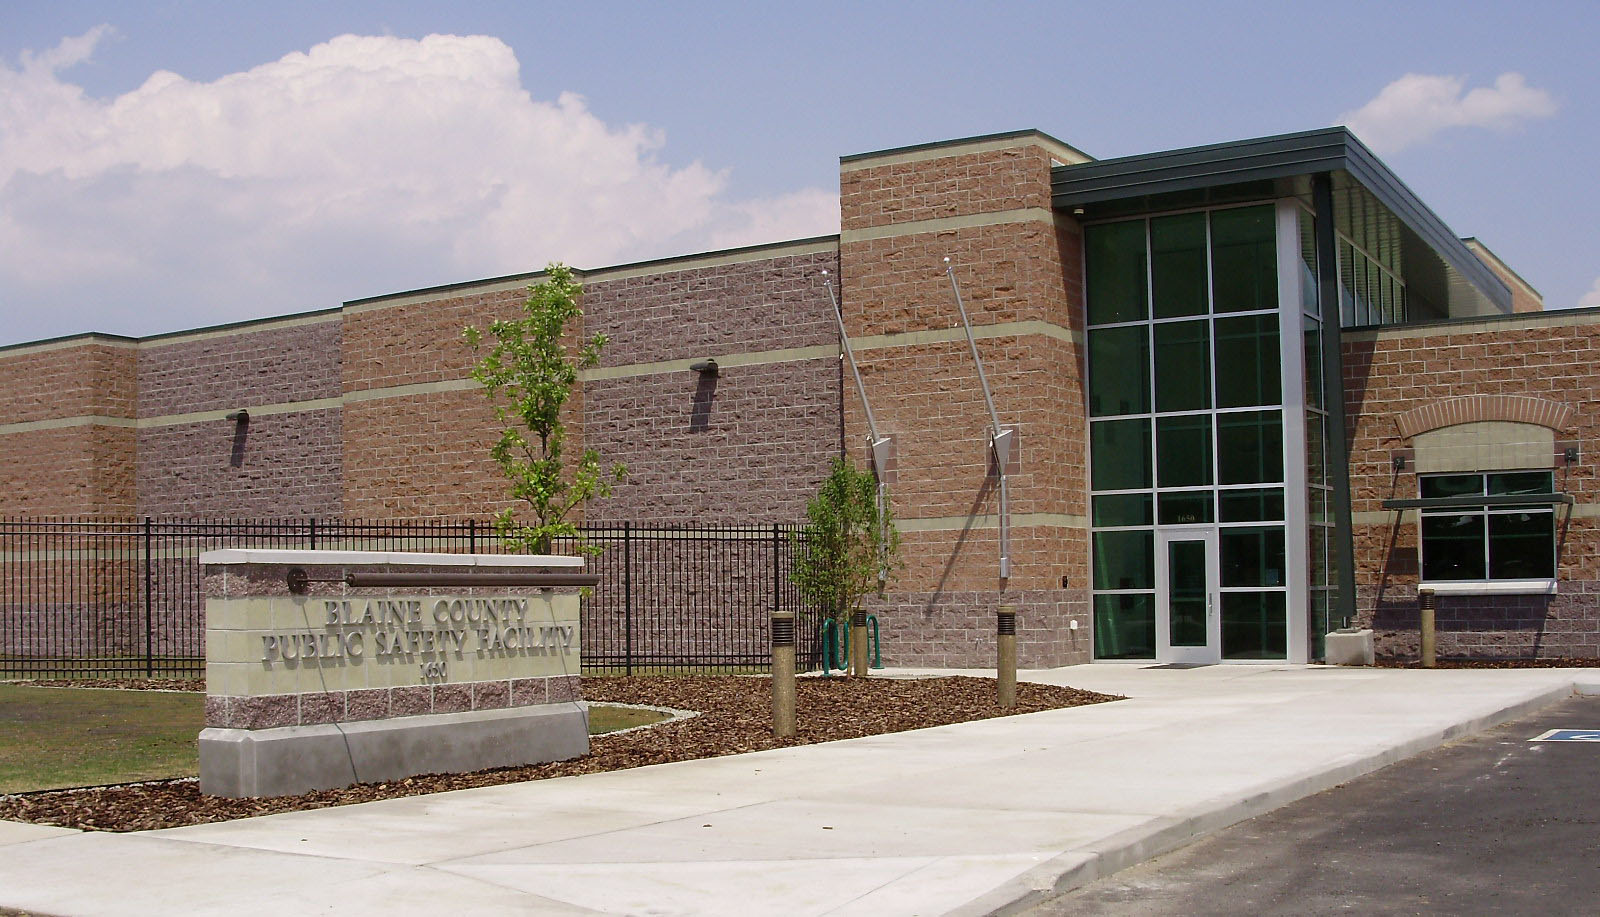 Blaine County Public Safety Facility